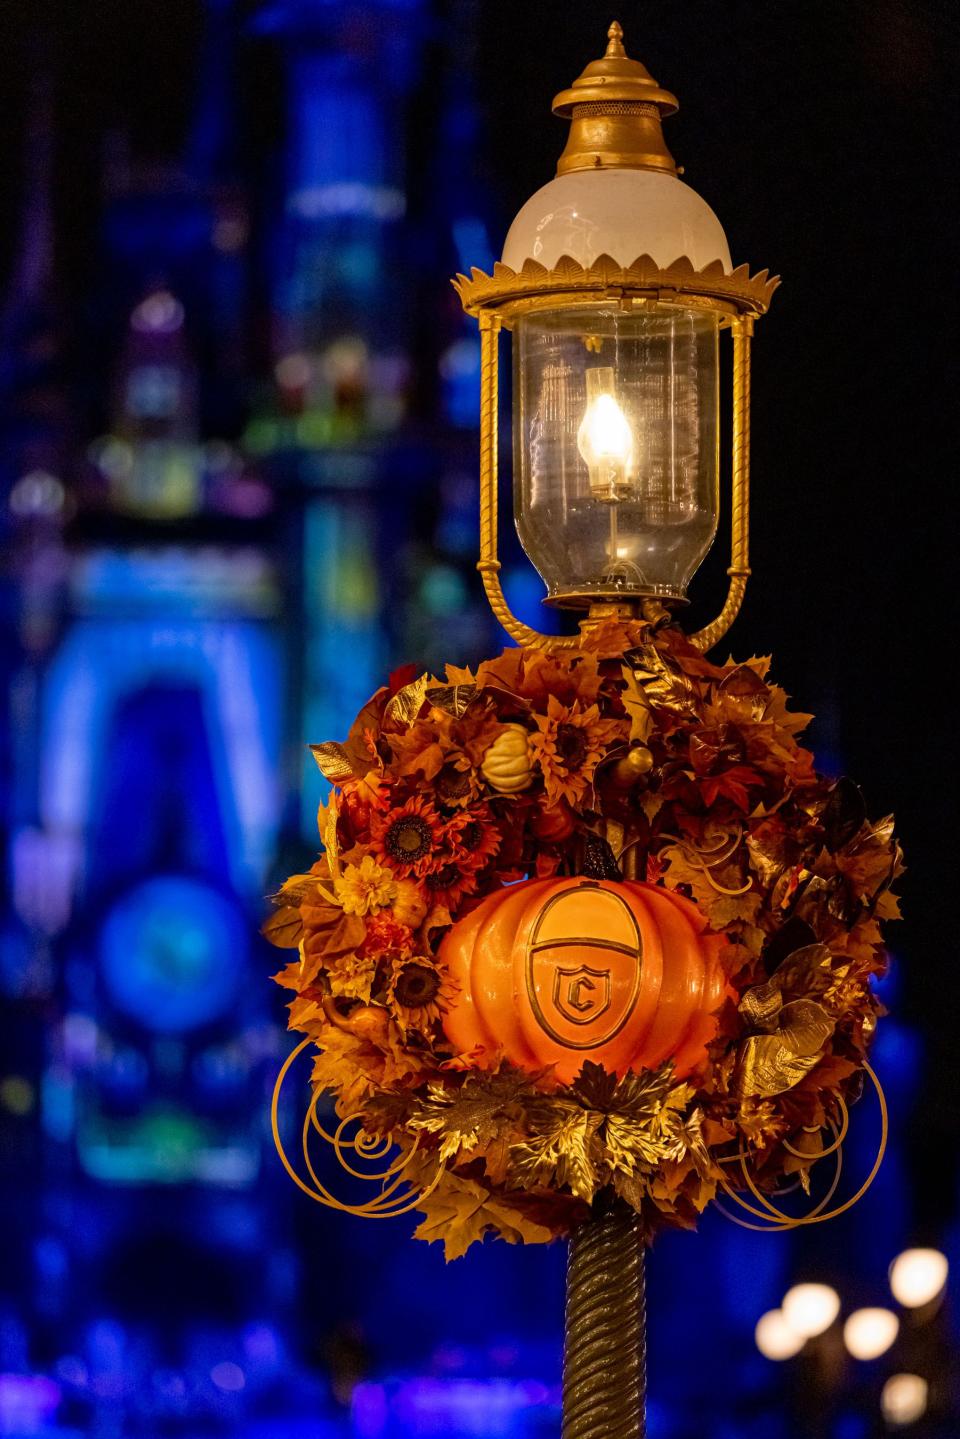 Festive autumn decor arrives in spooktacular fashion as the fall season descends on Magic Kingdom Park at Walt Disney World Resort on August 10, 2022 in Lake Buena Vista, Fla. (Courtney Kiefer, photographer)